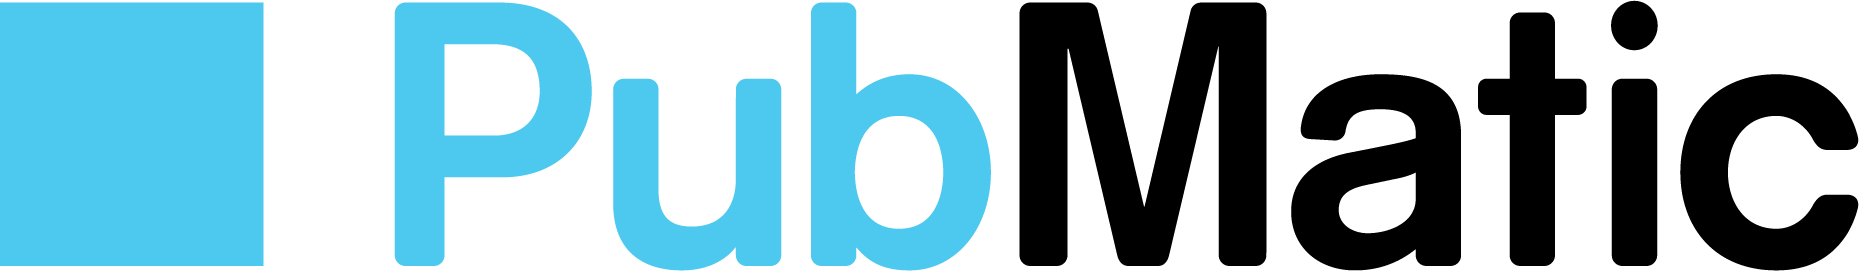 PubMatic_Logo-1